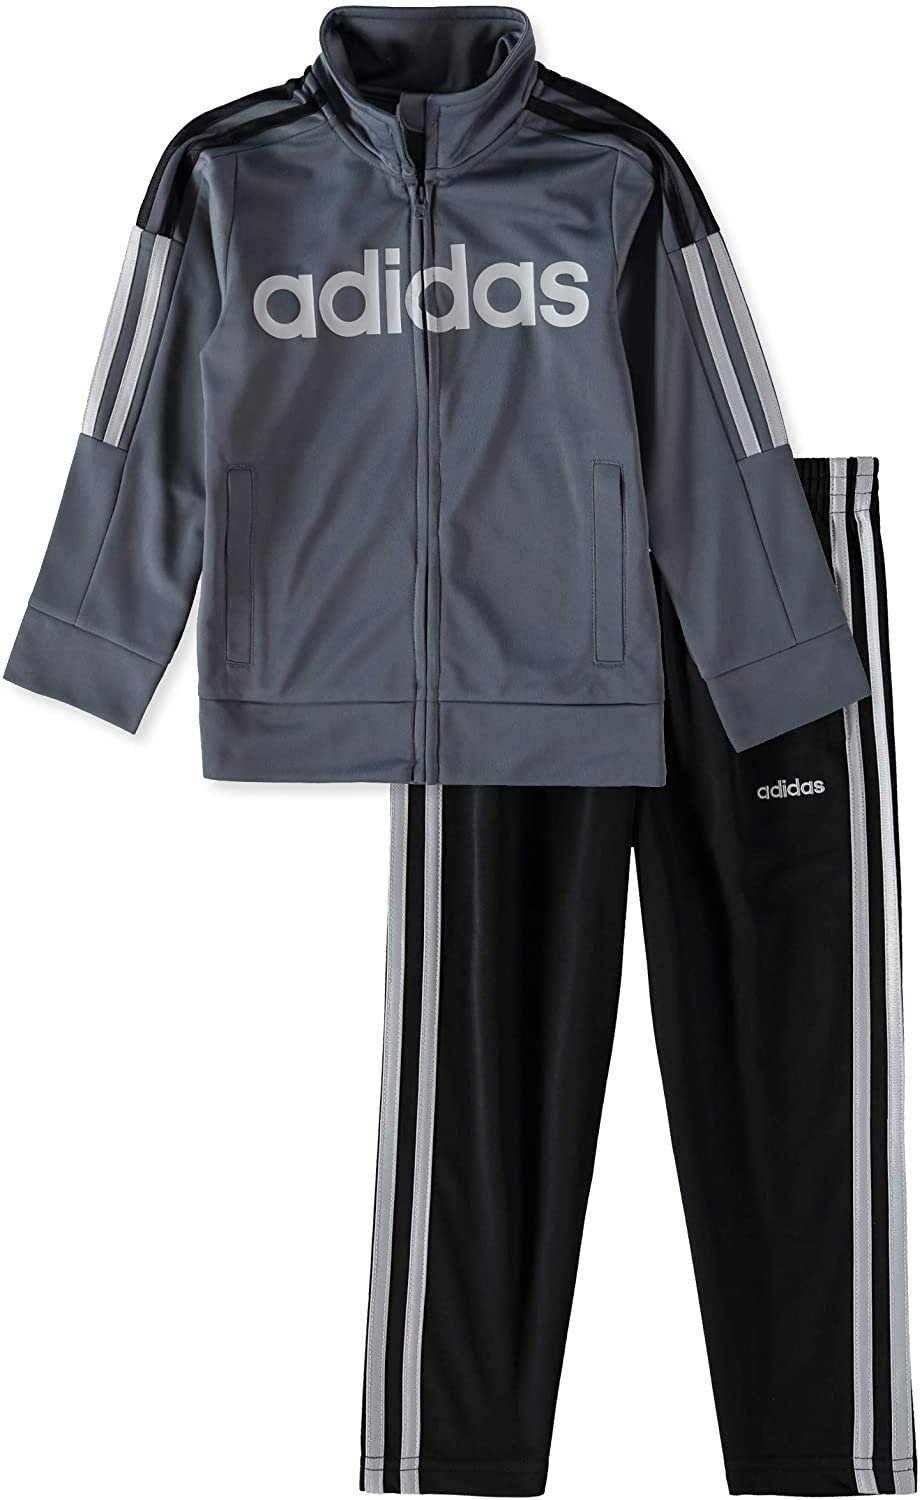 Adidas Boys' Tricot Jacket & Pant Clothing